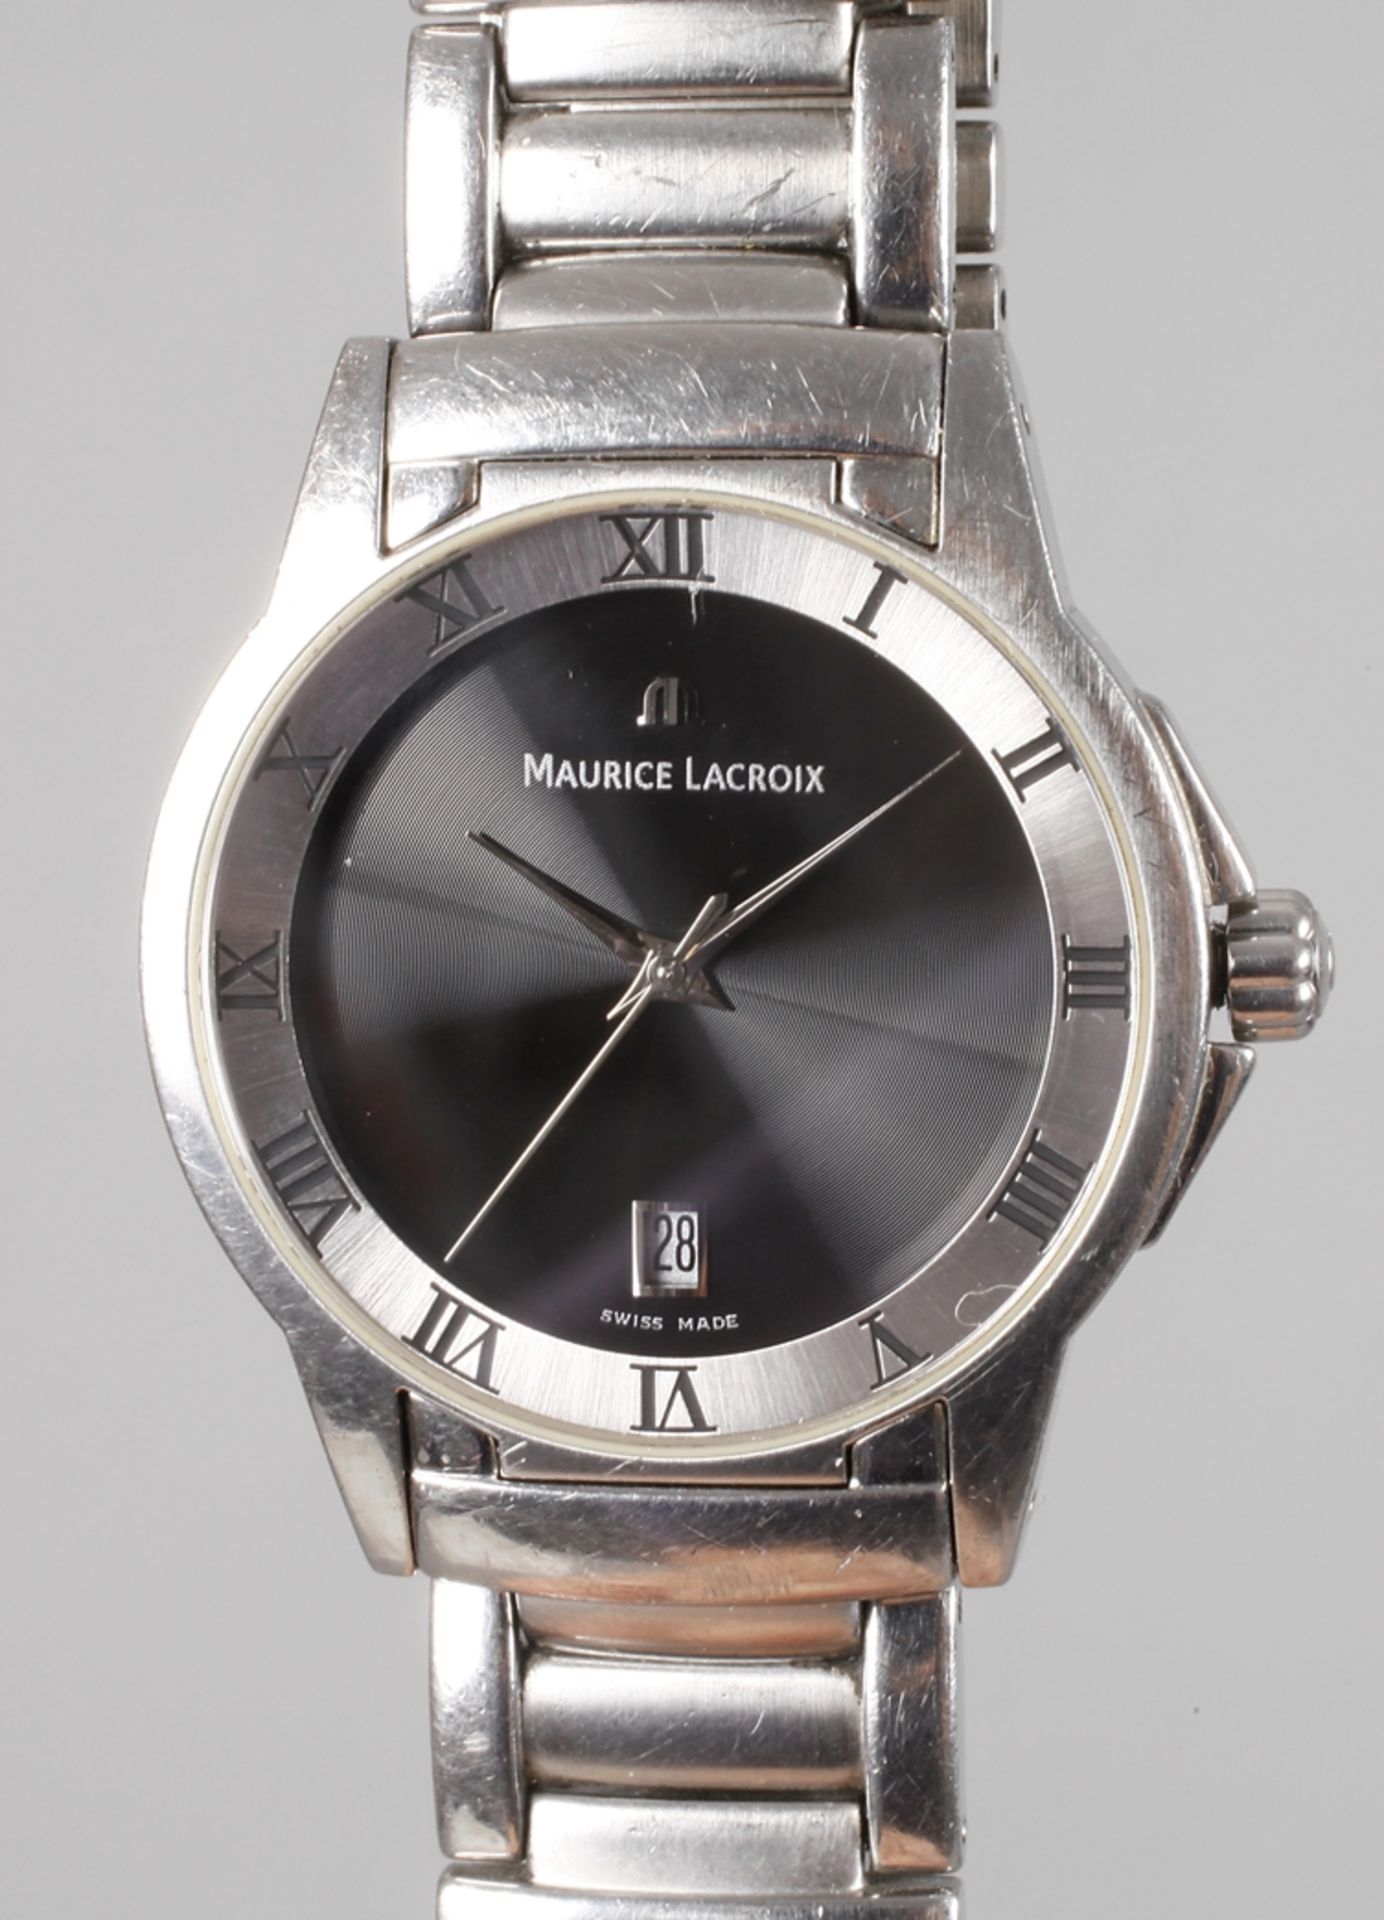 Armbanduhr Maurice Lacroixum 2000, Edelstahlgehäuse mit originalem Gliederarmband und Doppel-